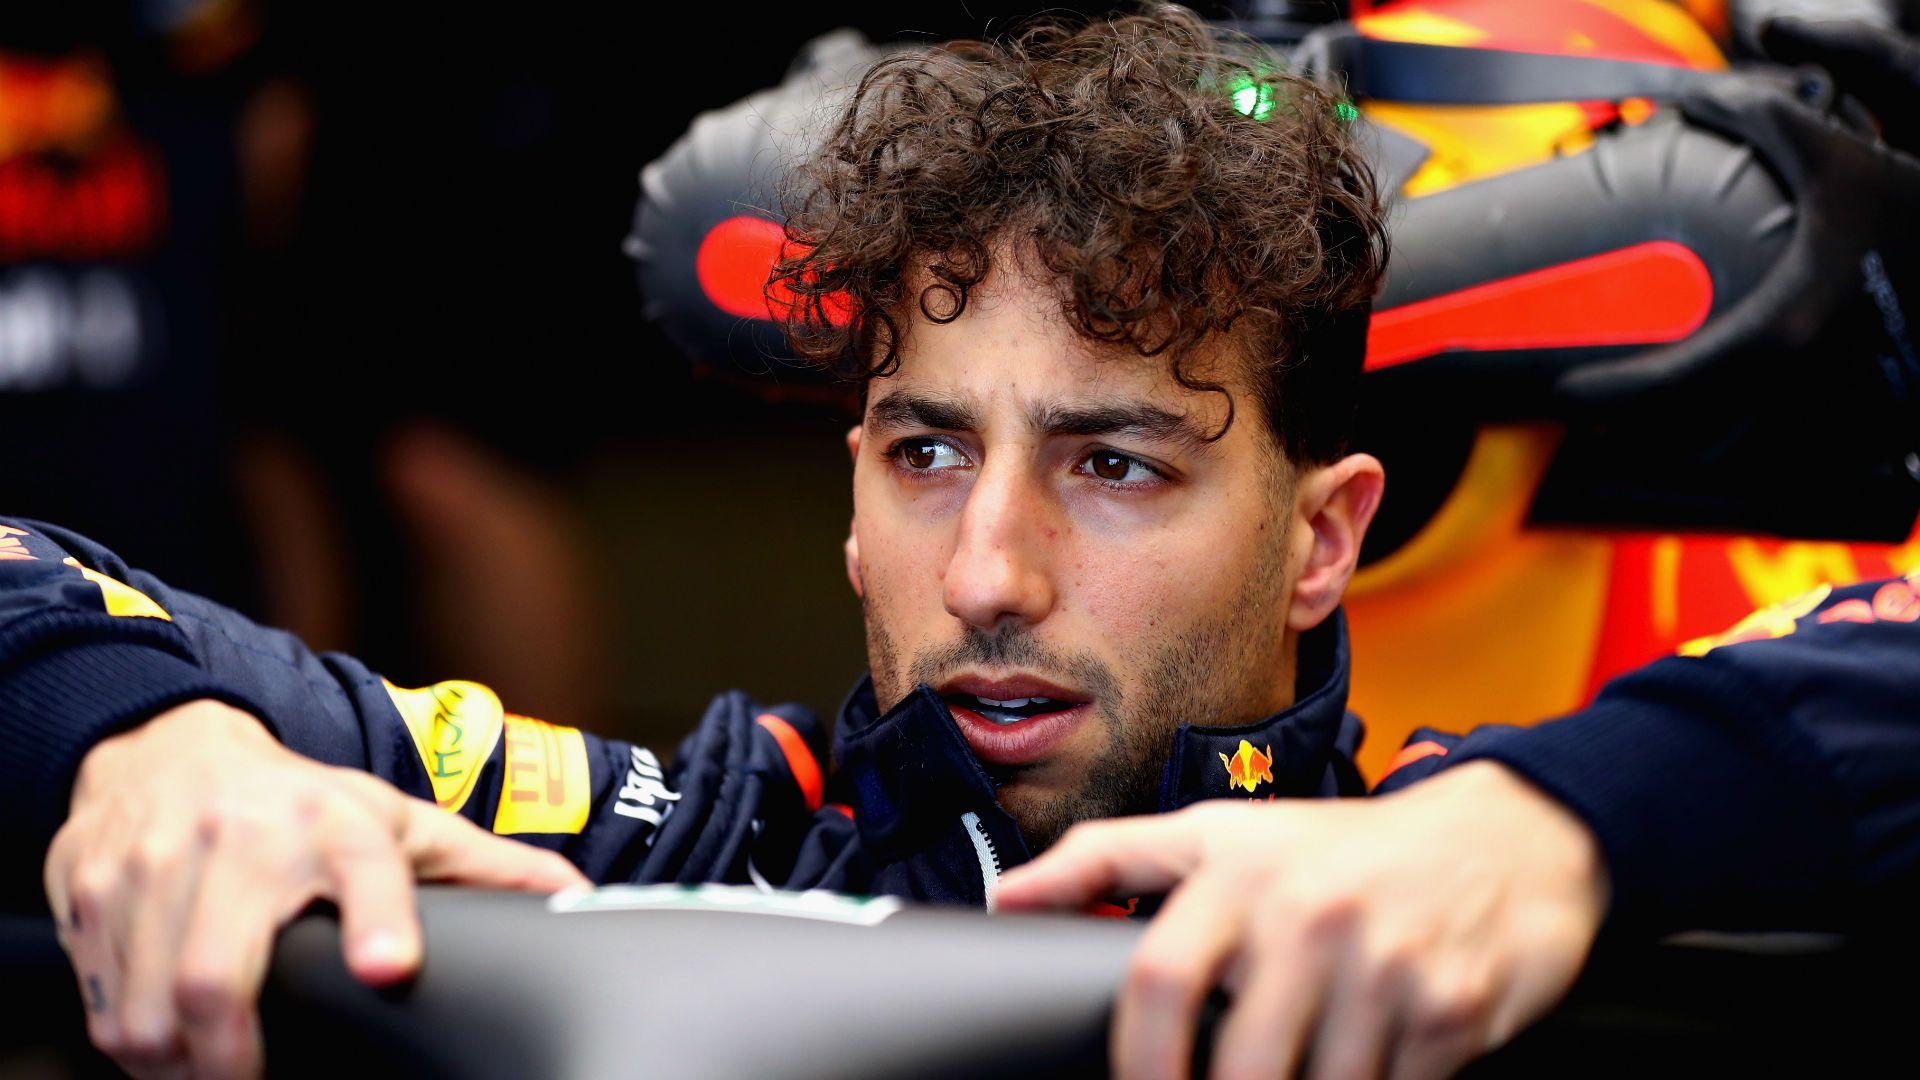 F1: Daniel Ricciardo Given Three Place Grid Penalty